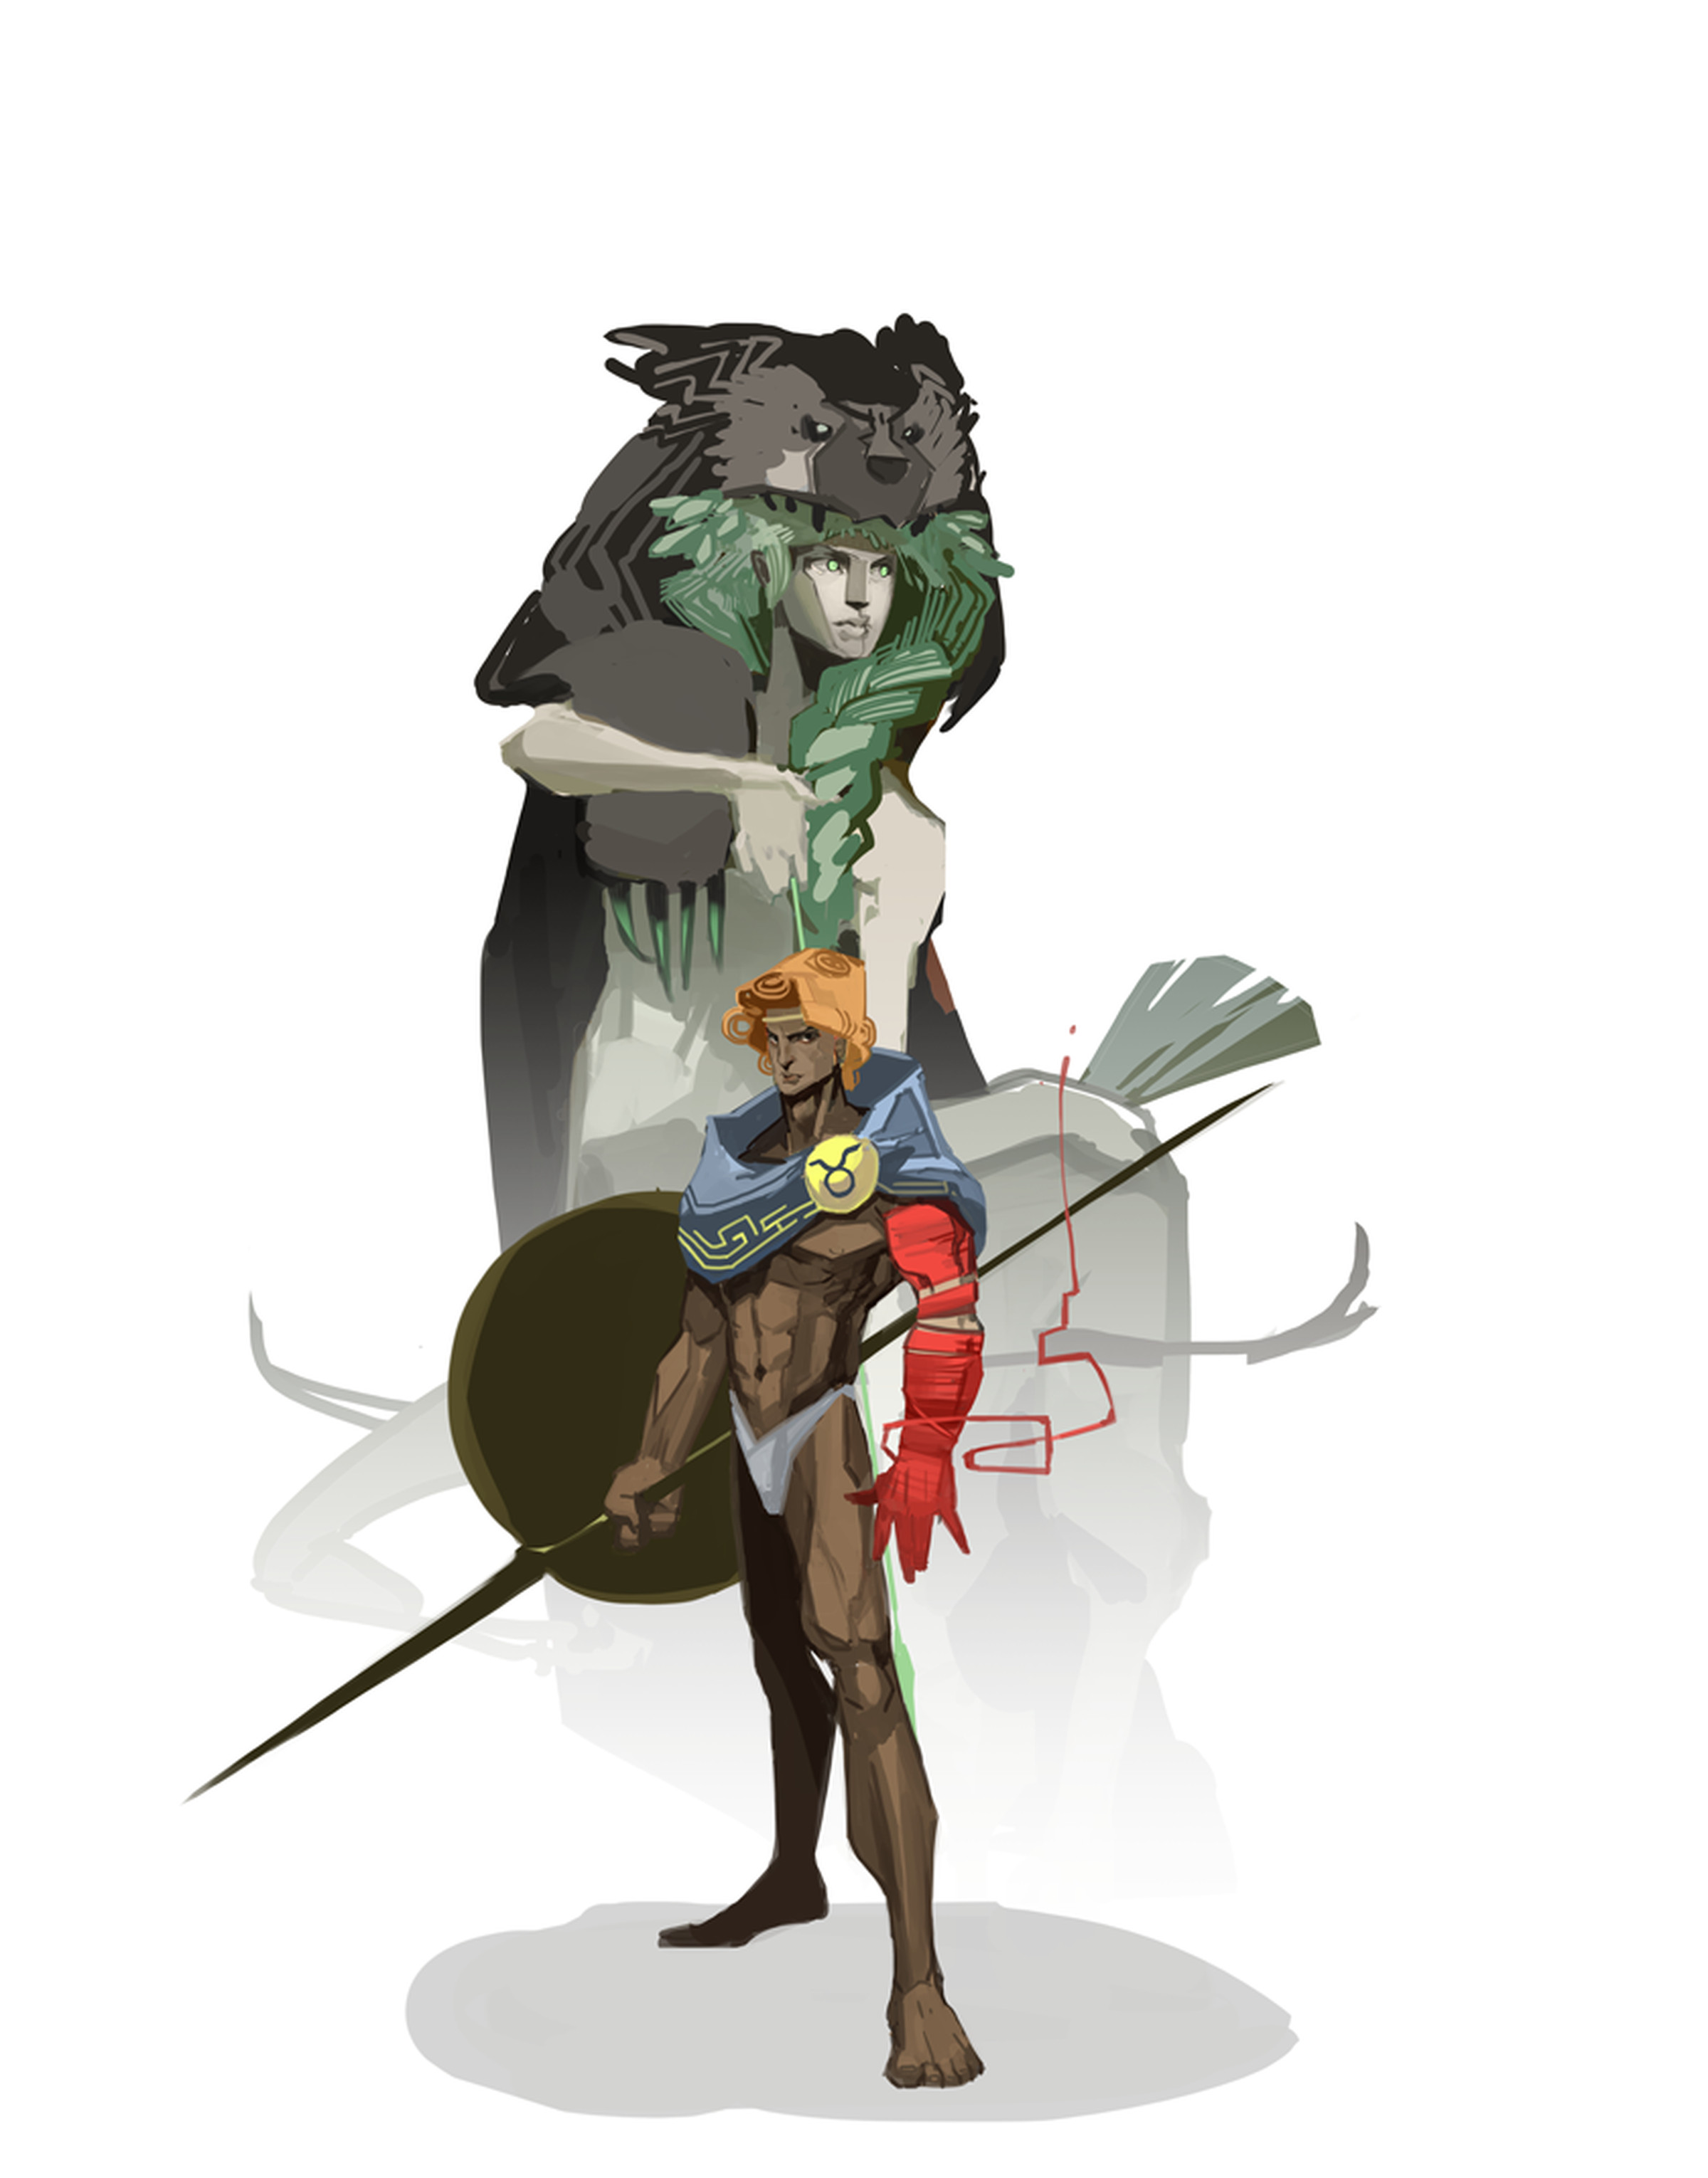 Concept art featuring Theseus with Artemis.